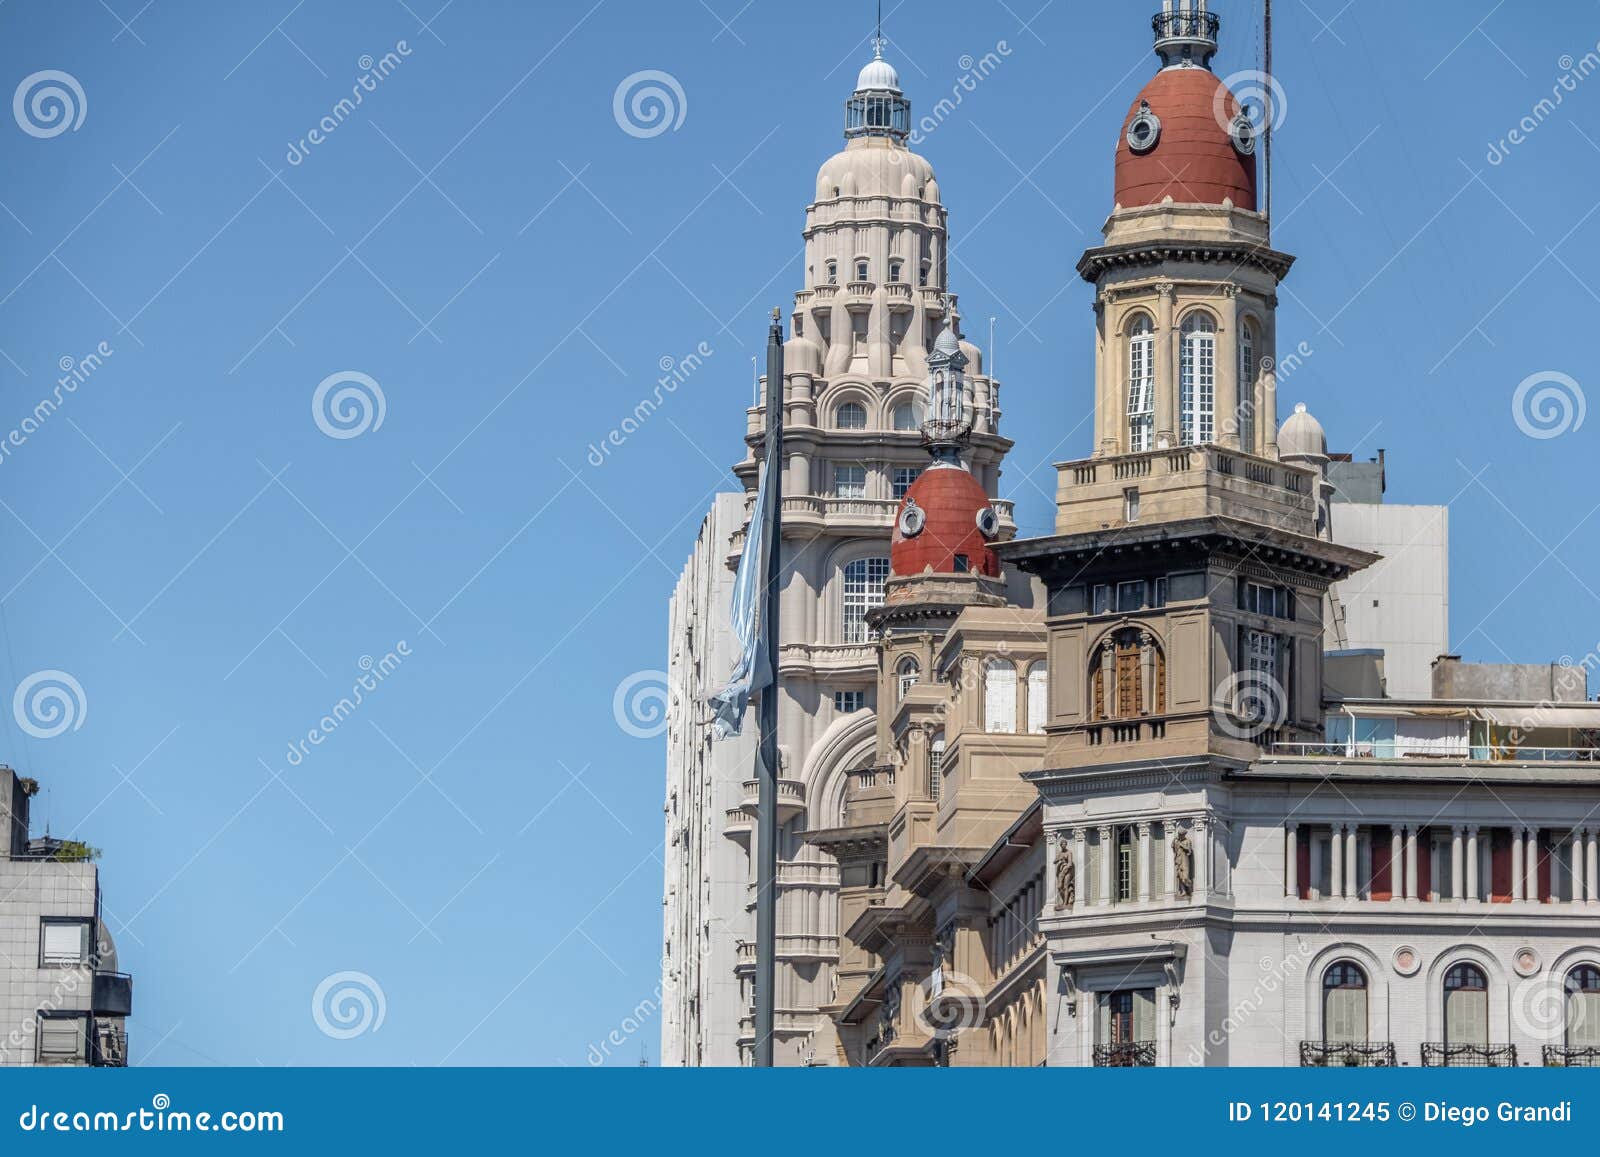 barolo palace and la inmobiliaria buildings - buenos aires, argentina